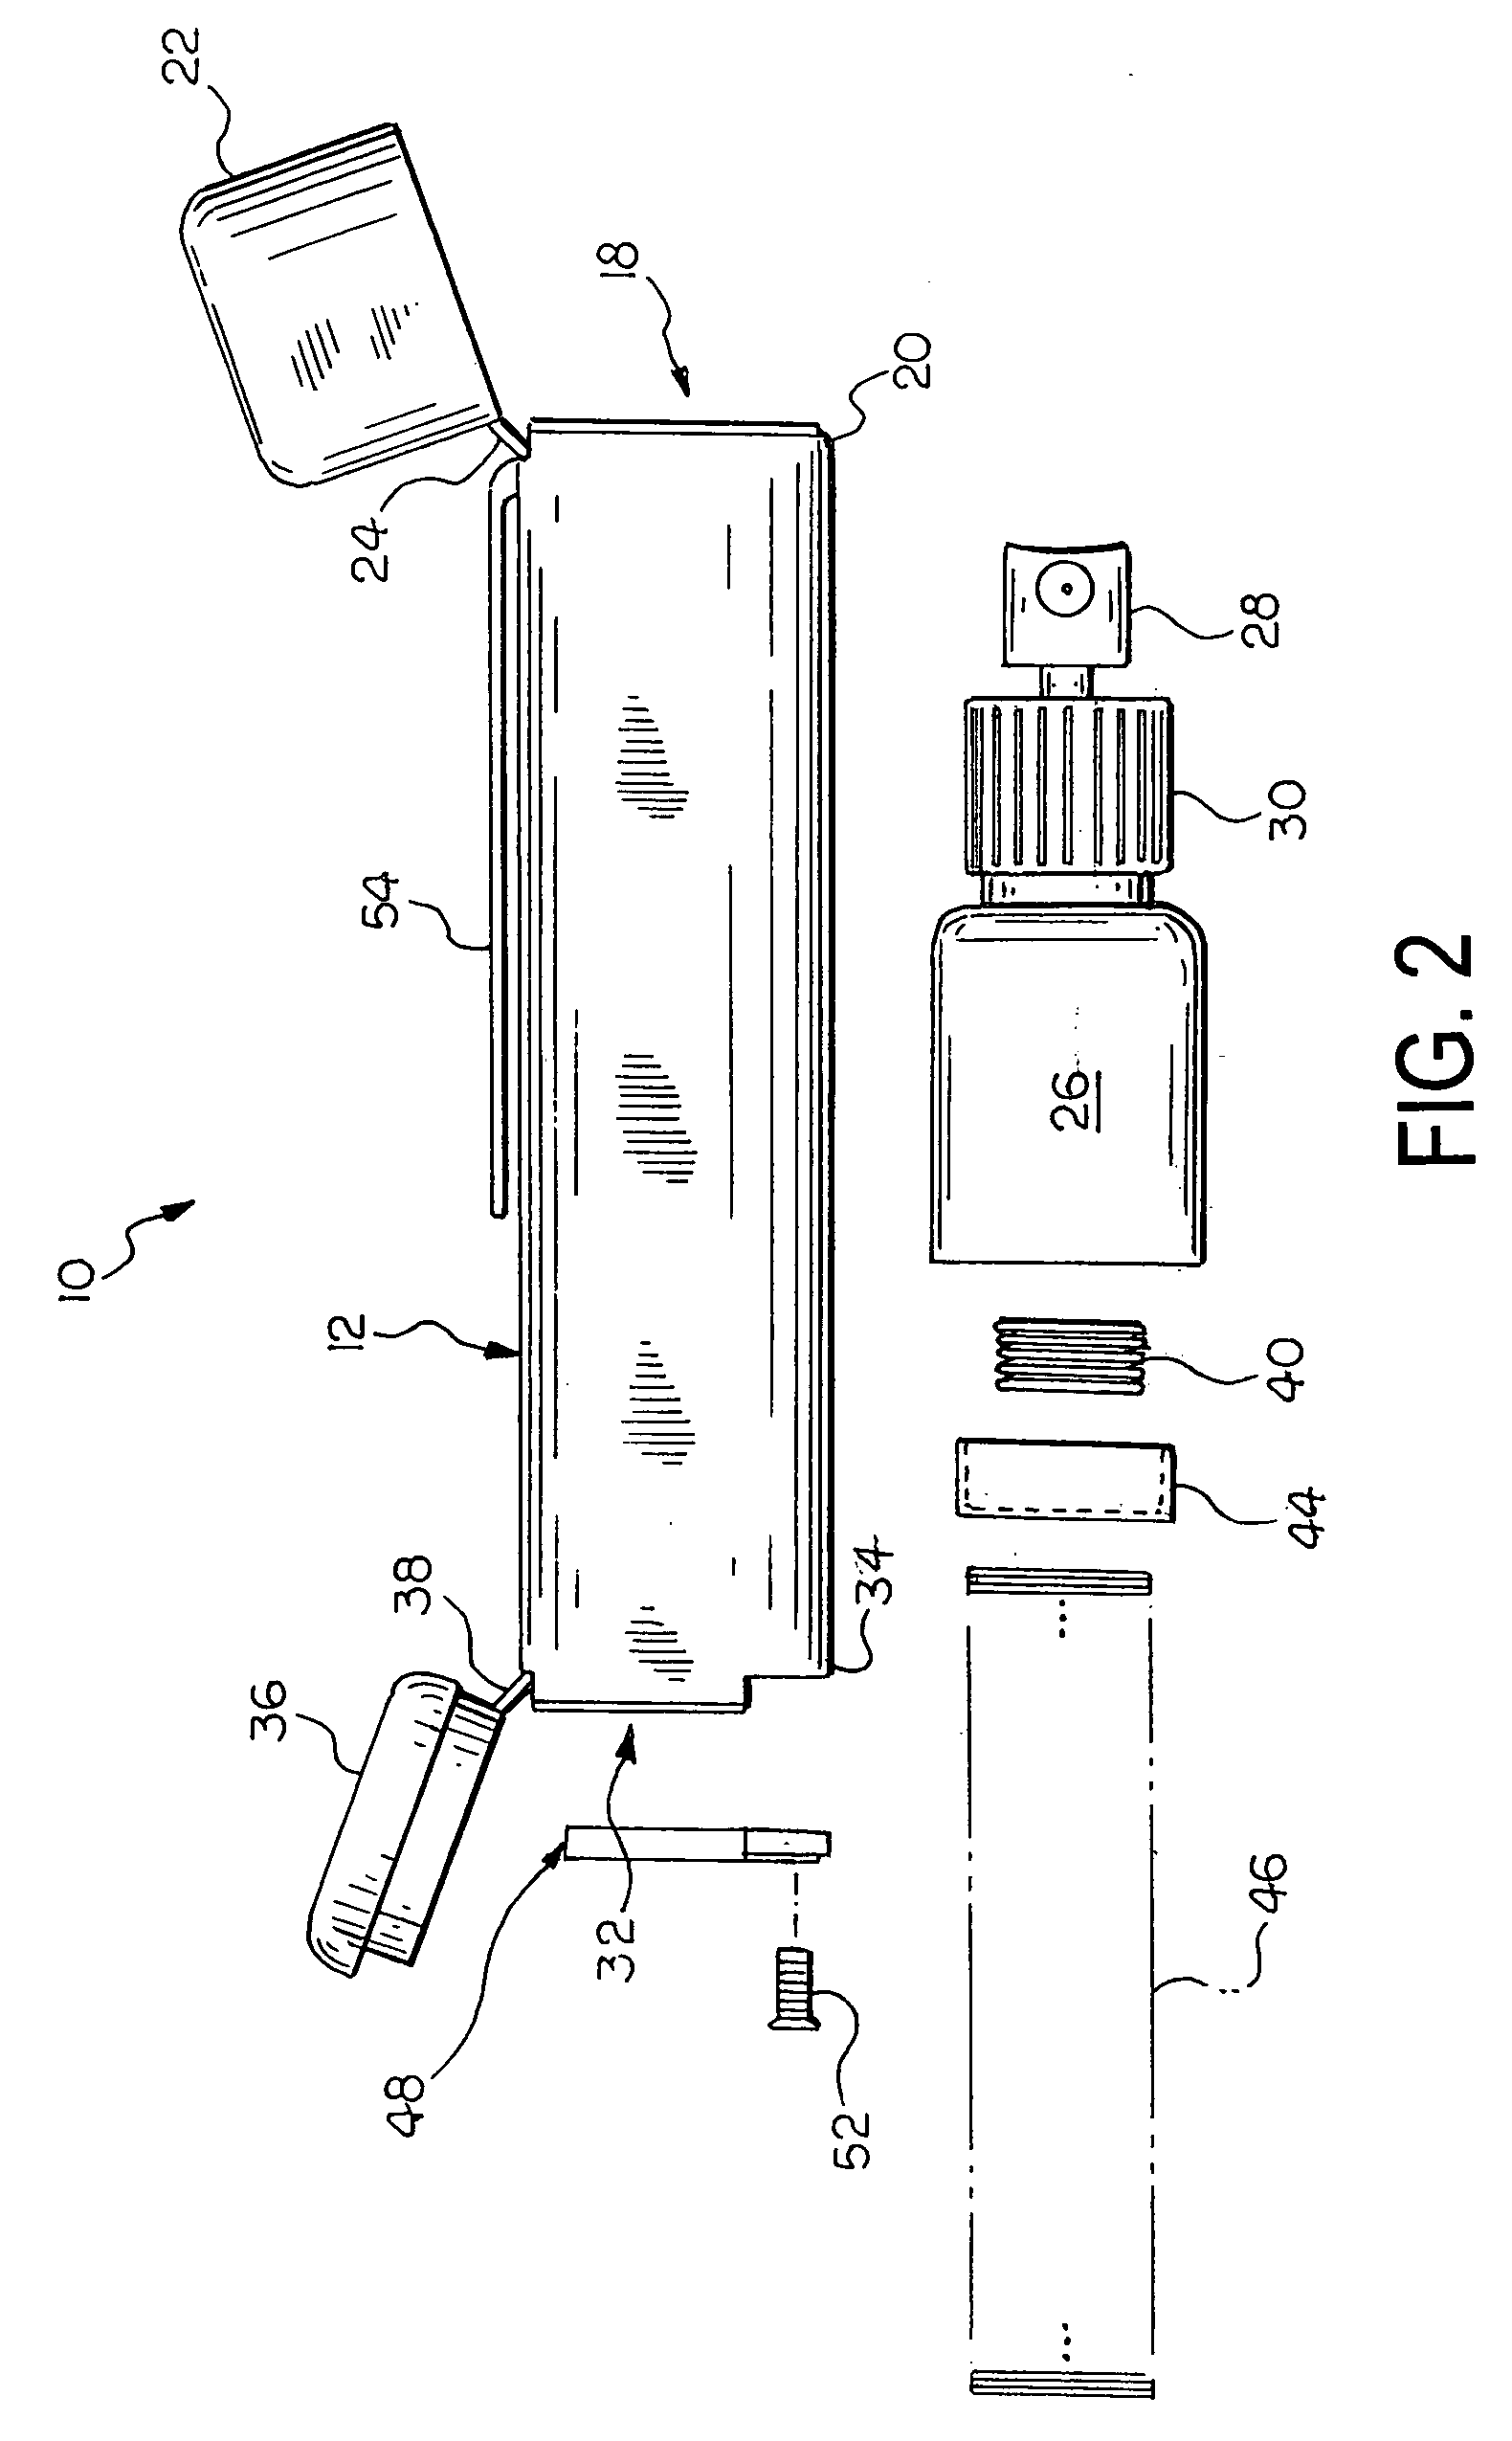 Portable dispensing apparatus